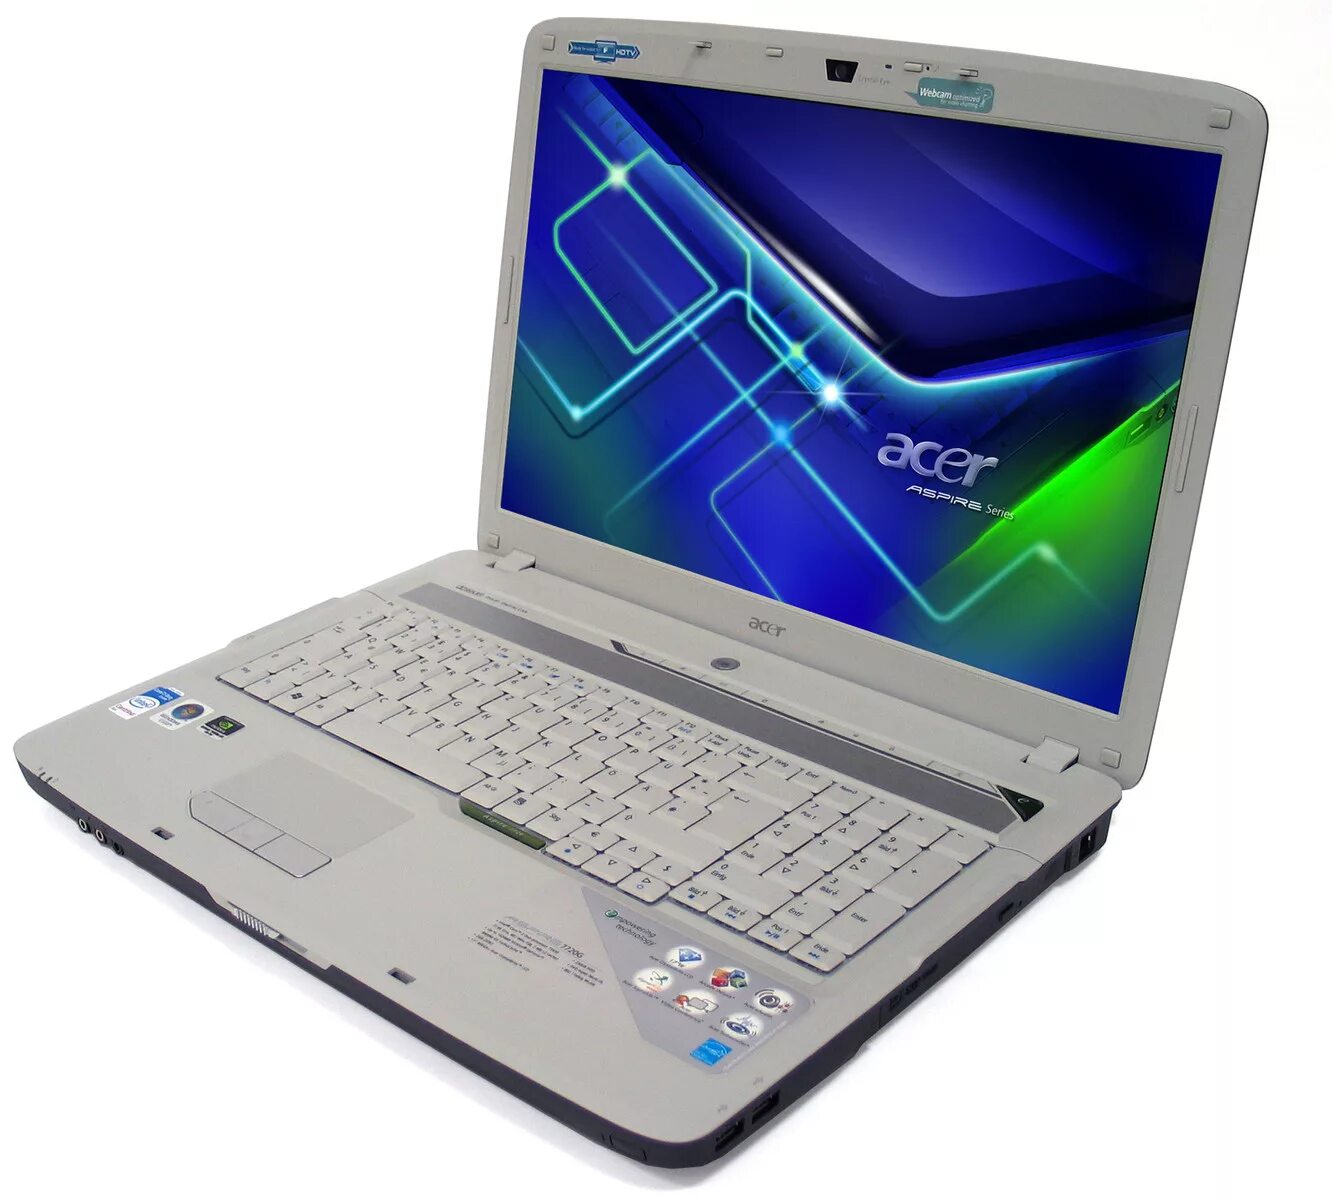 Acer Aspire 7720. Acer Aspire 7720g. Ноутбук Acer Aspire 7720. Ноутбук Acer Aspire 7220. Асер модели ноутбуков